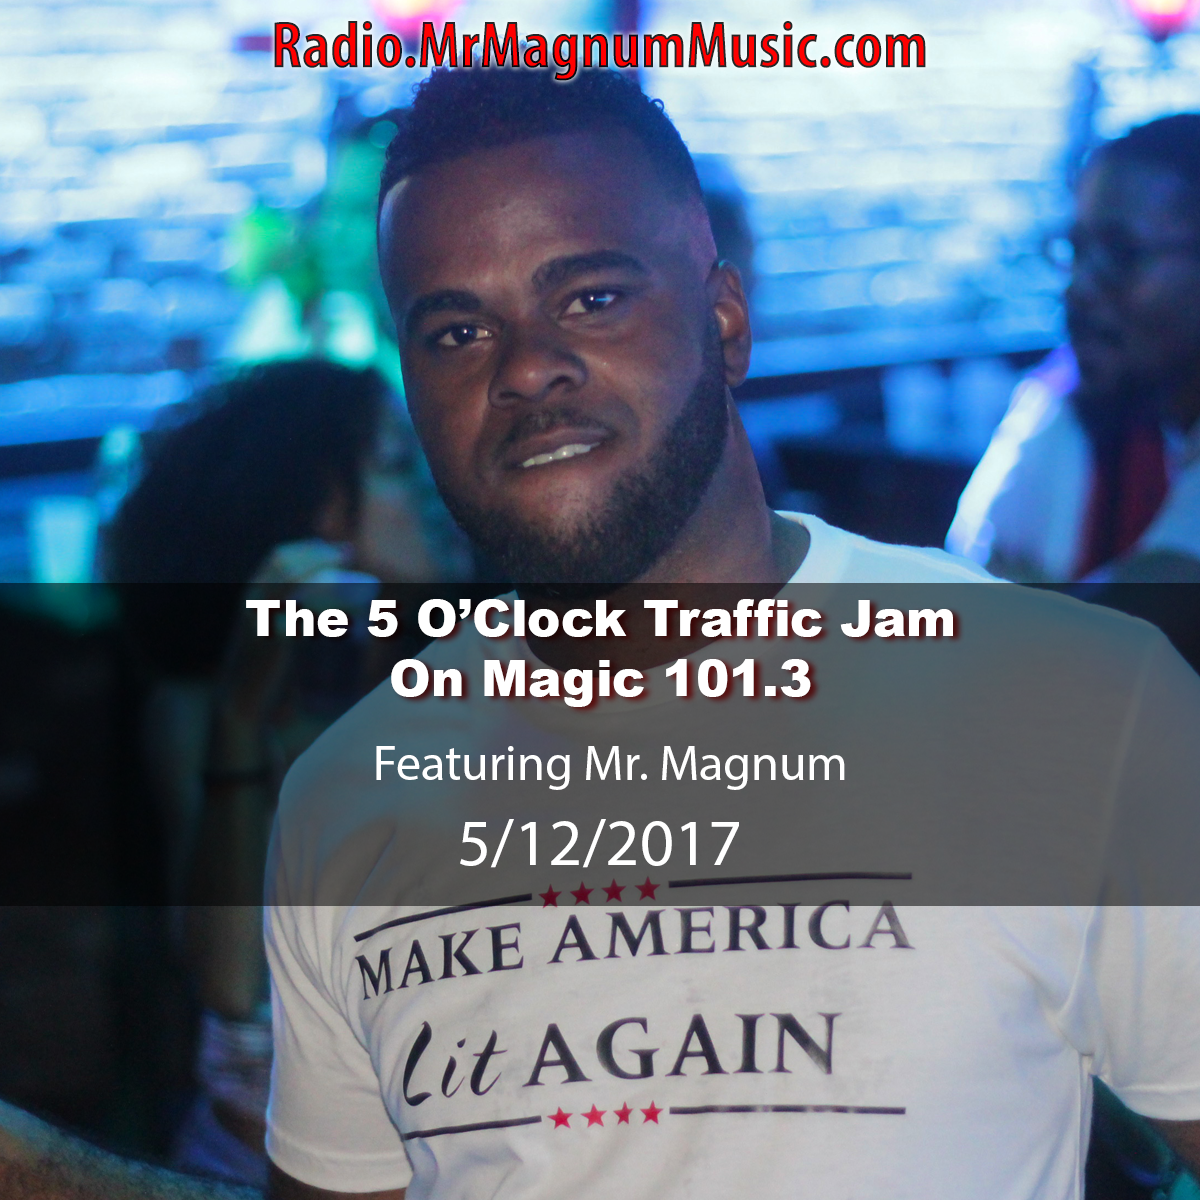 5 O’Clock Traffic Jam 5-12-2017 on Magic 101.3